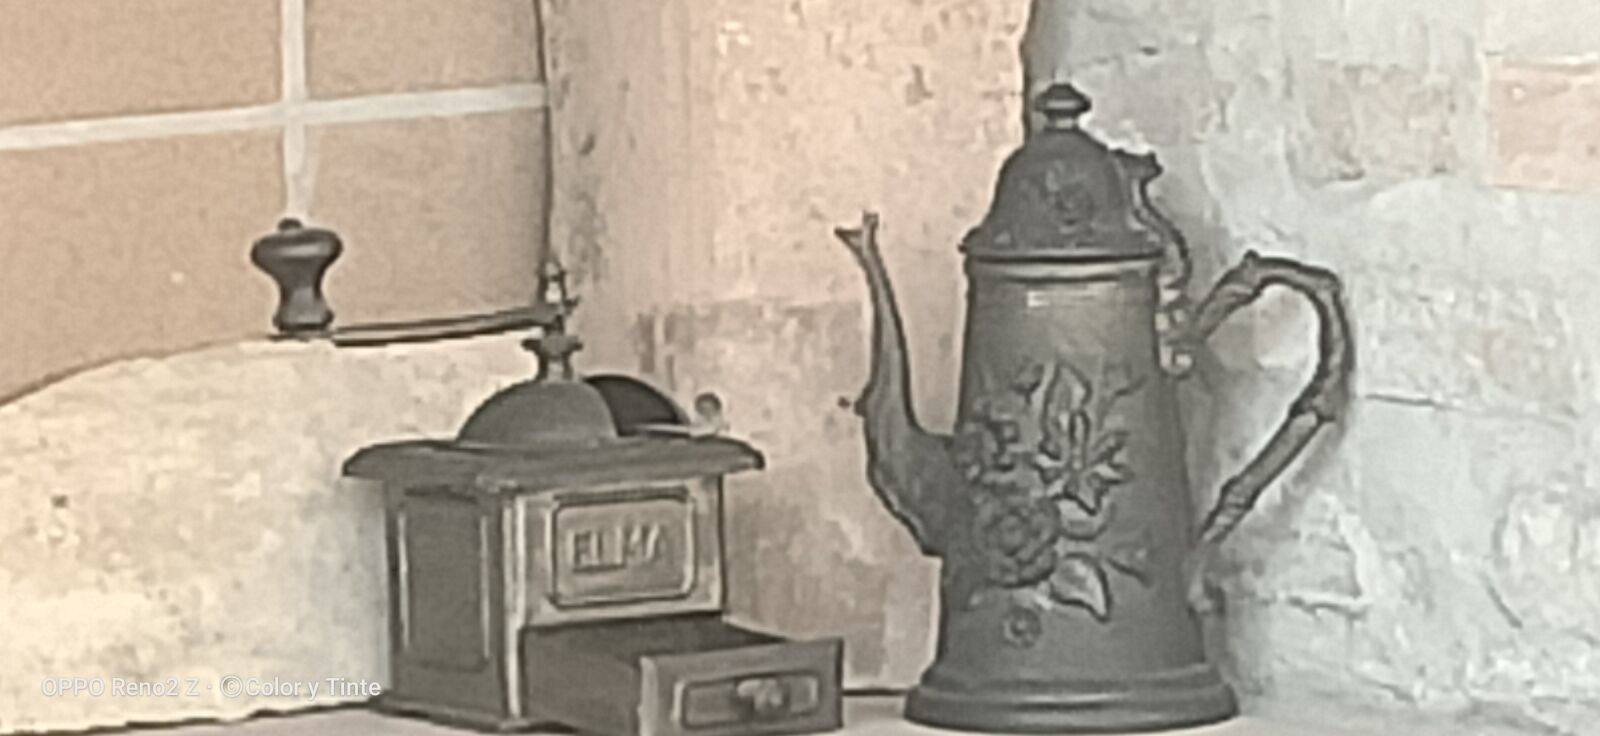 OPPO RENO2 Z sample photo. Kettle, grinder, vintage photography